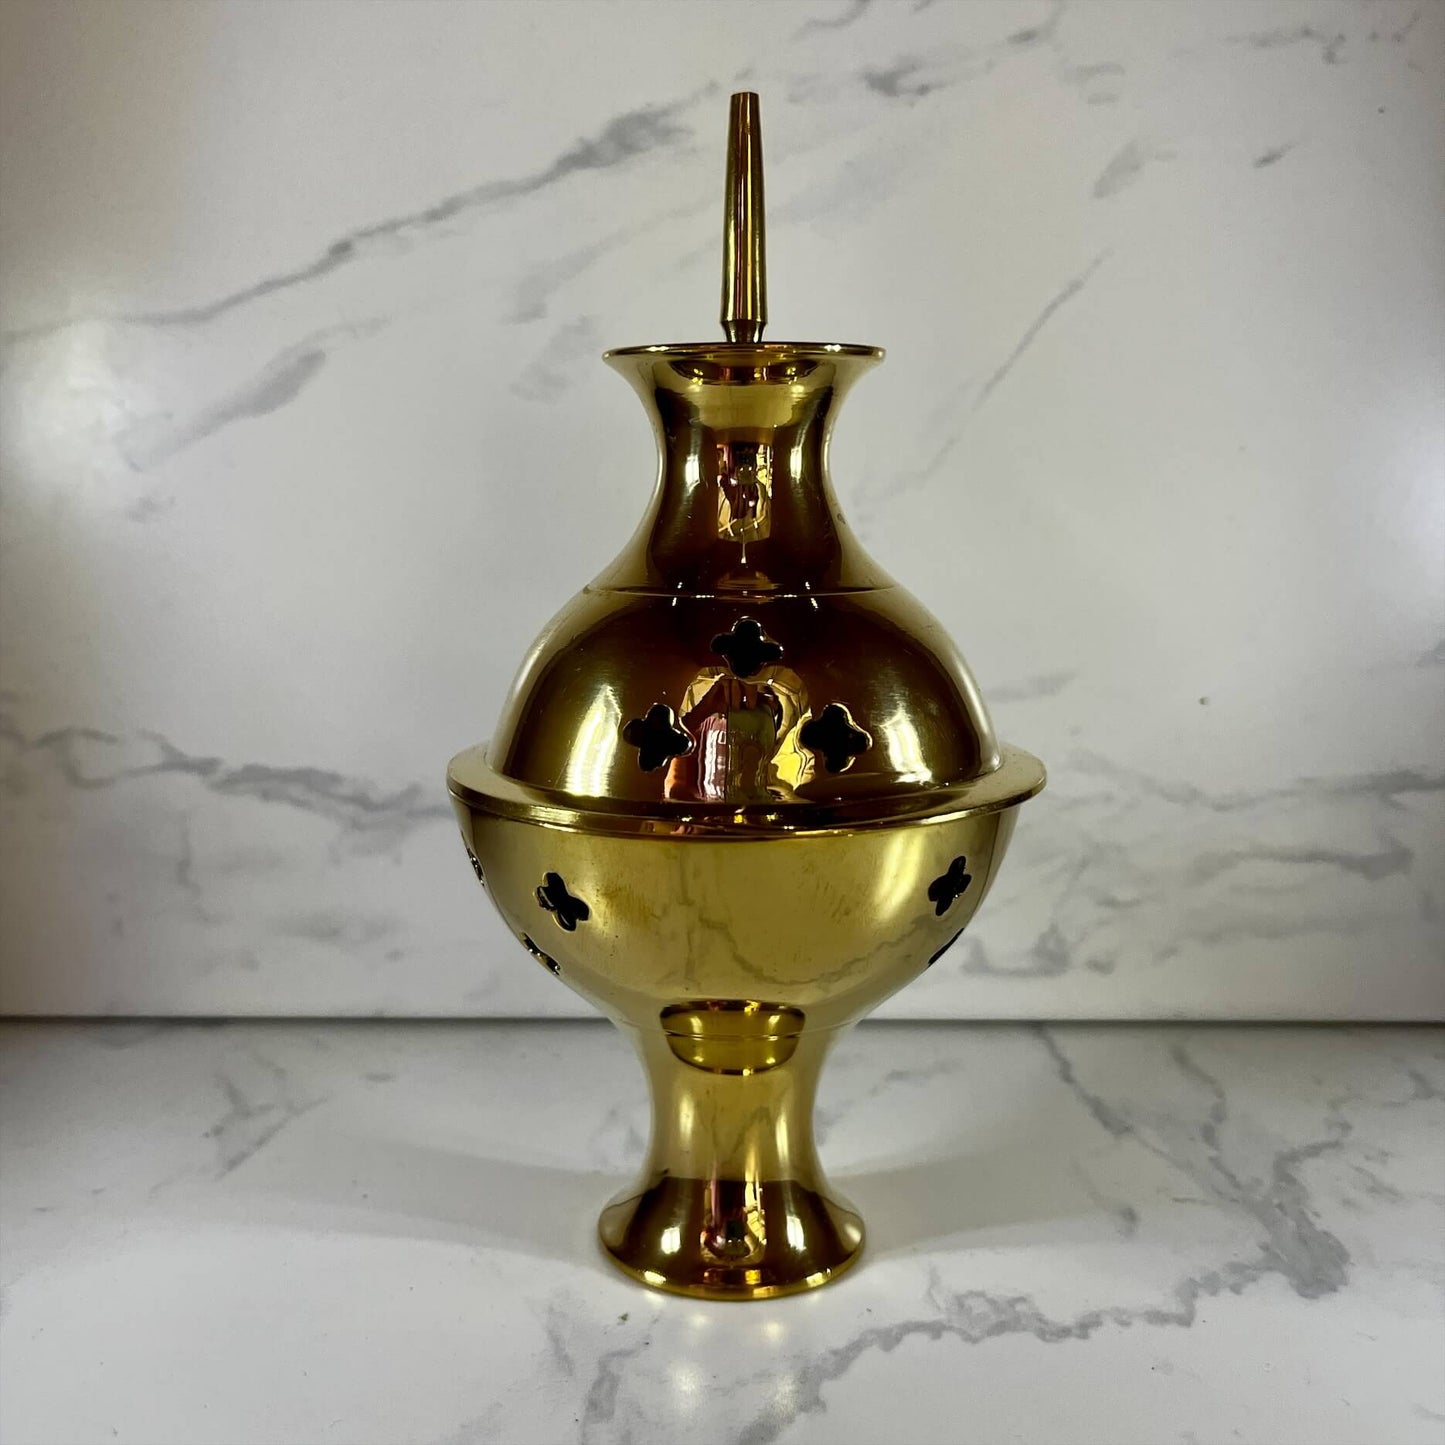 Tall Brass incense holder